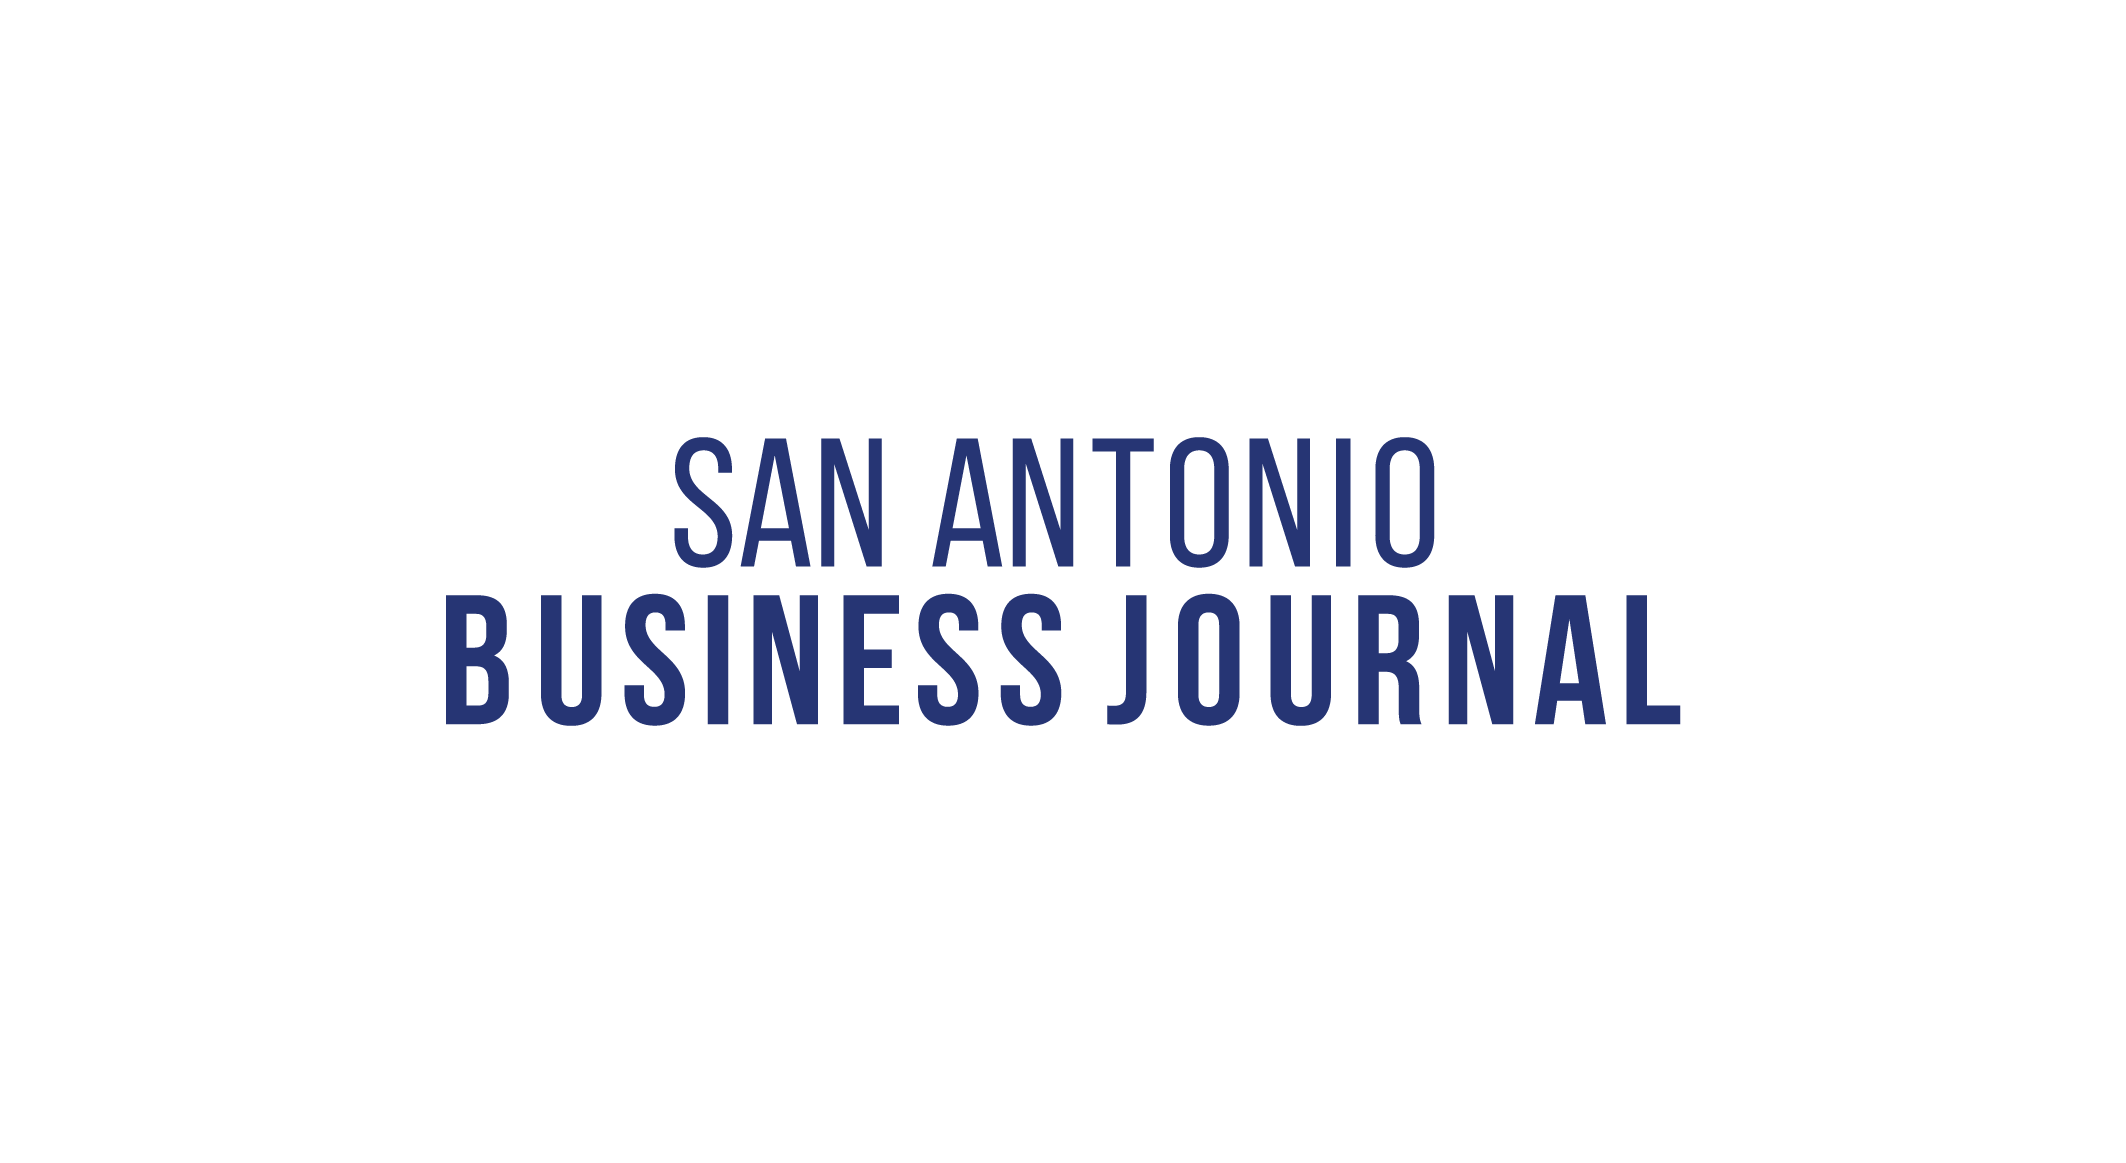 DreamWeek Sets A Goal To Share San Antonio’s Voice / San Antonio Business Journal